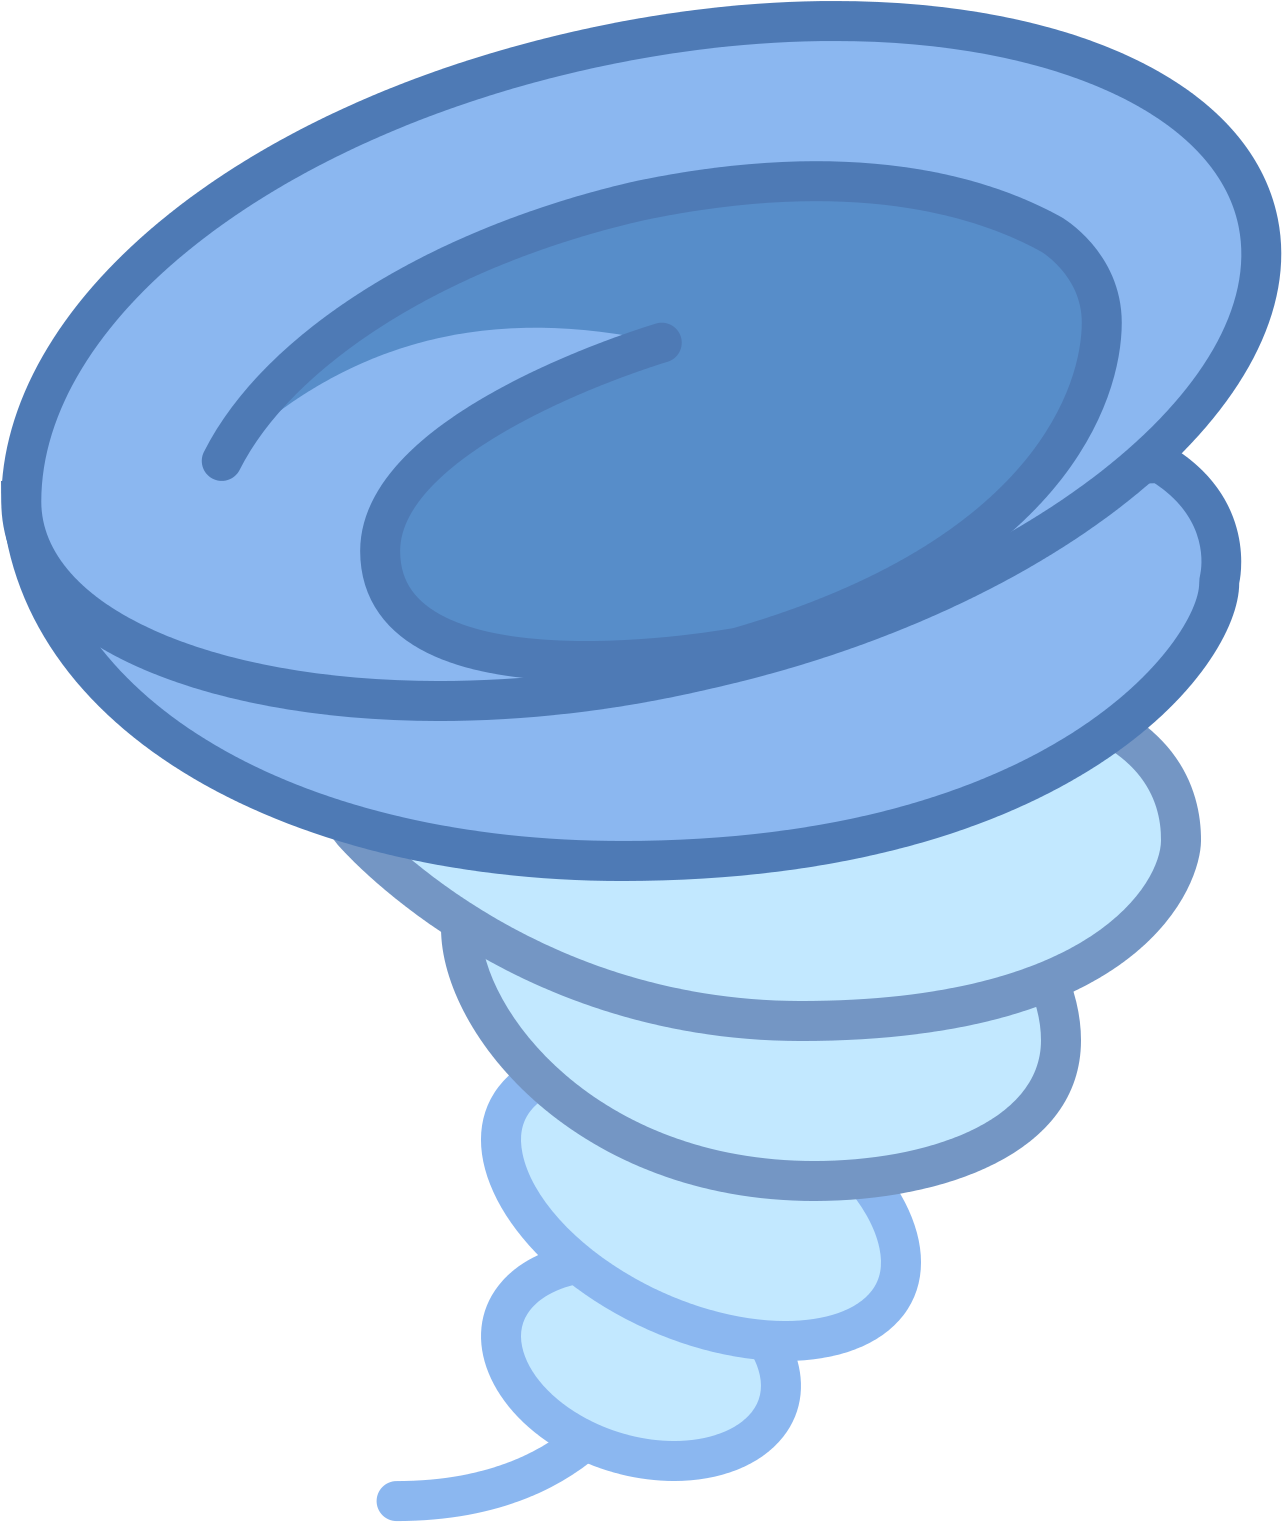 Cartoon Tornado Graphic PNG image